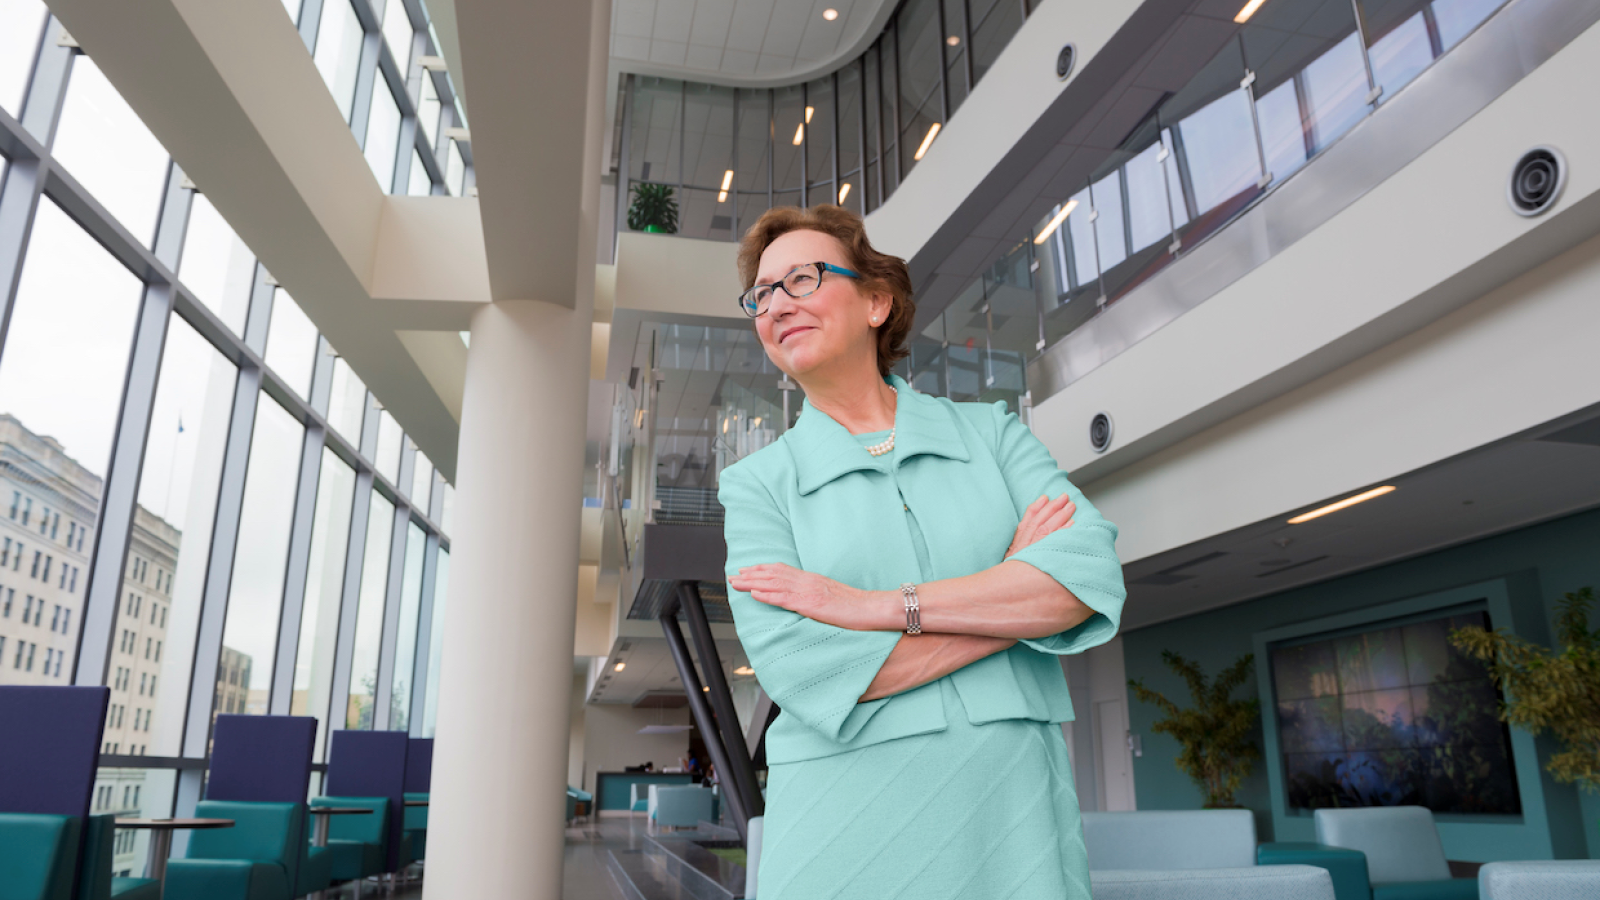 Dr. Rappley led Virginia’s most comprehensive academic health center 2015-2019. She retired Jan. 2. Photo: Allen Jones, VCU University Marketing